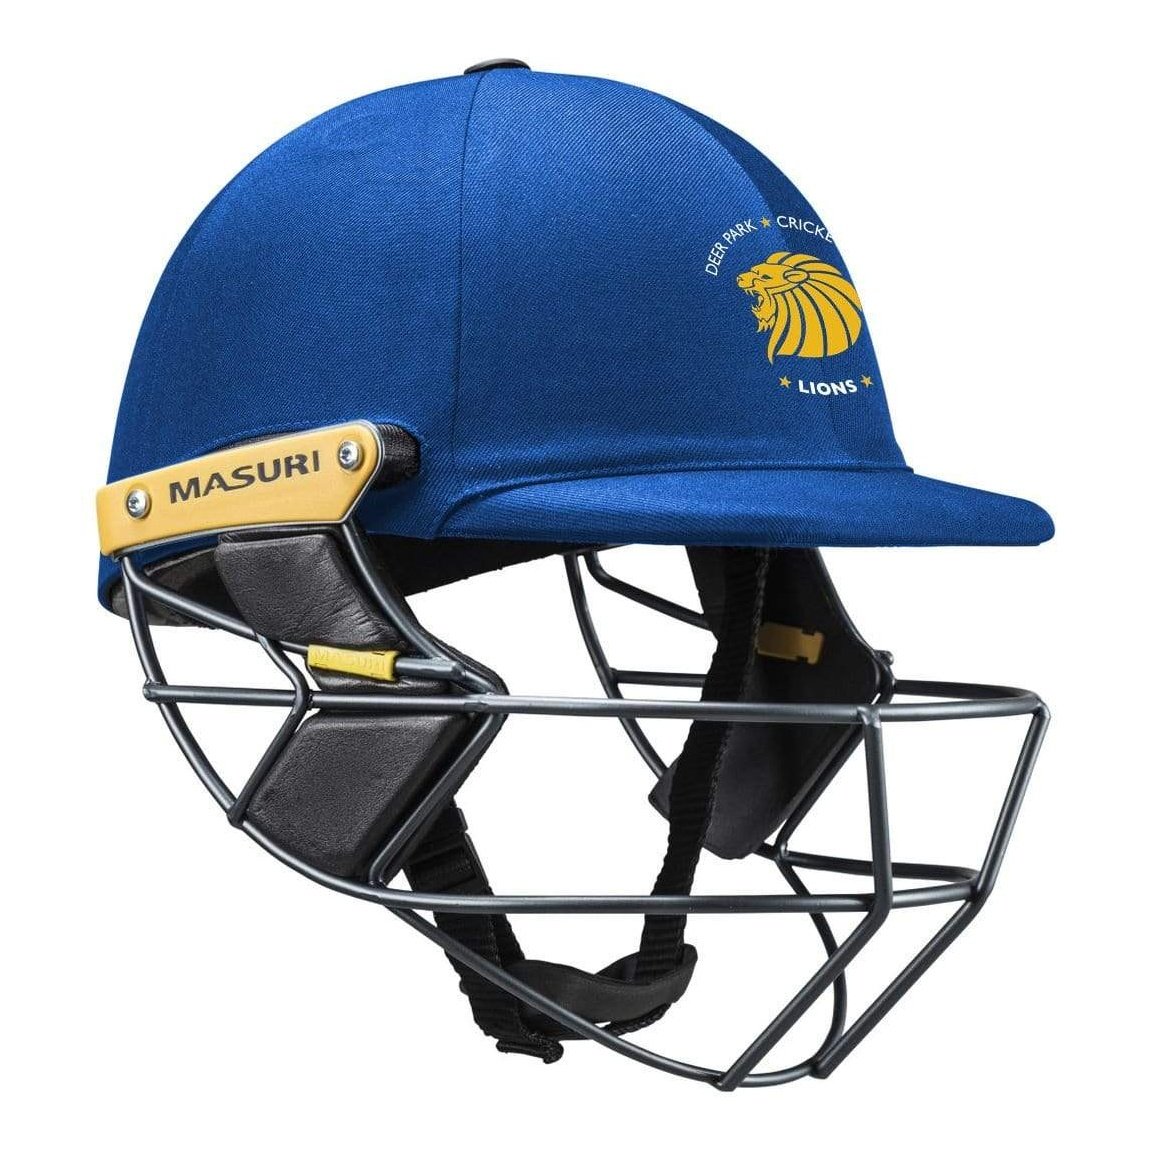 Masuri Club Helmet Deer Park Cricket Club Helmet